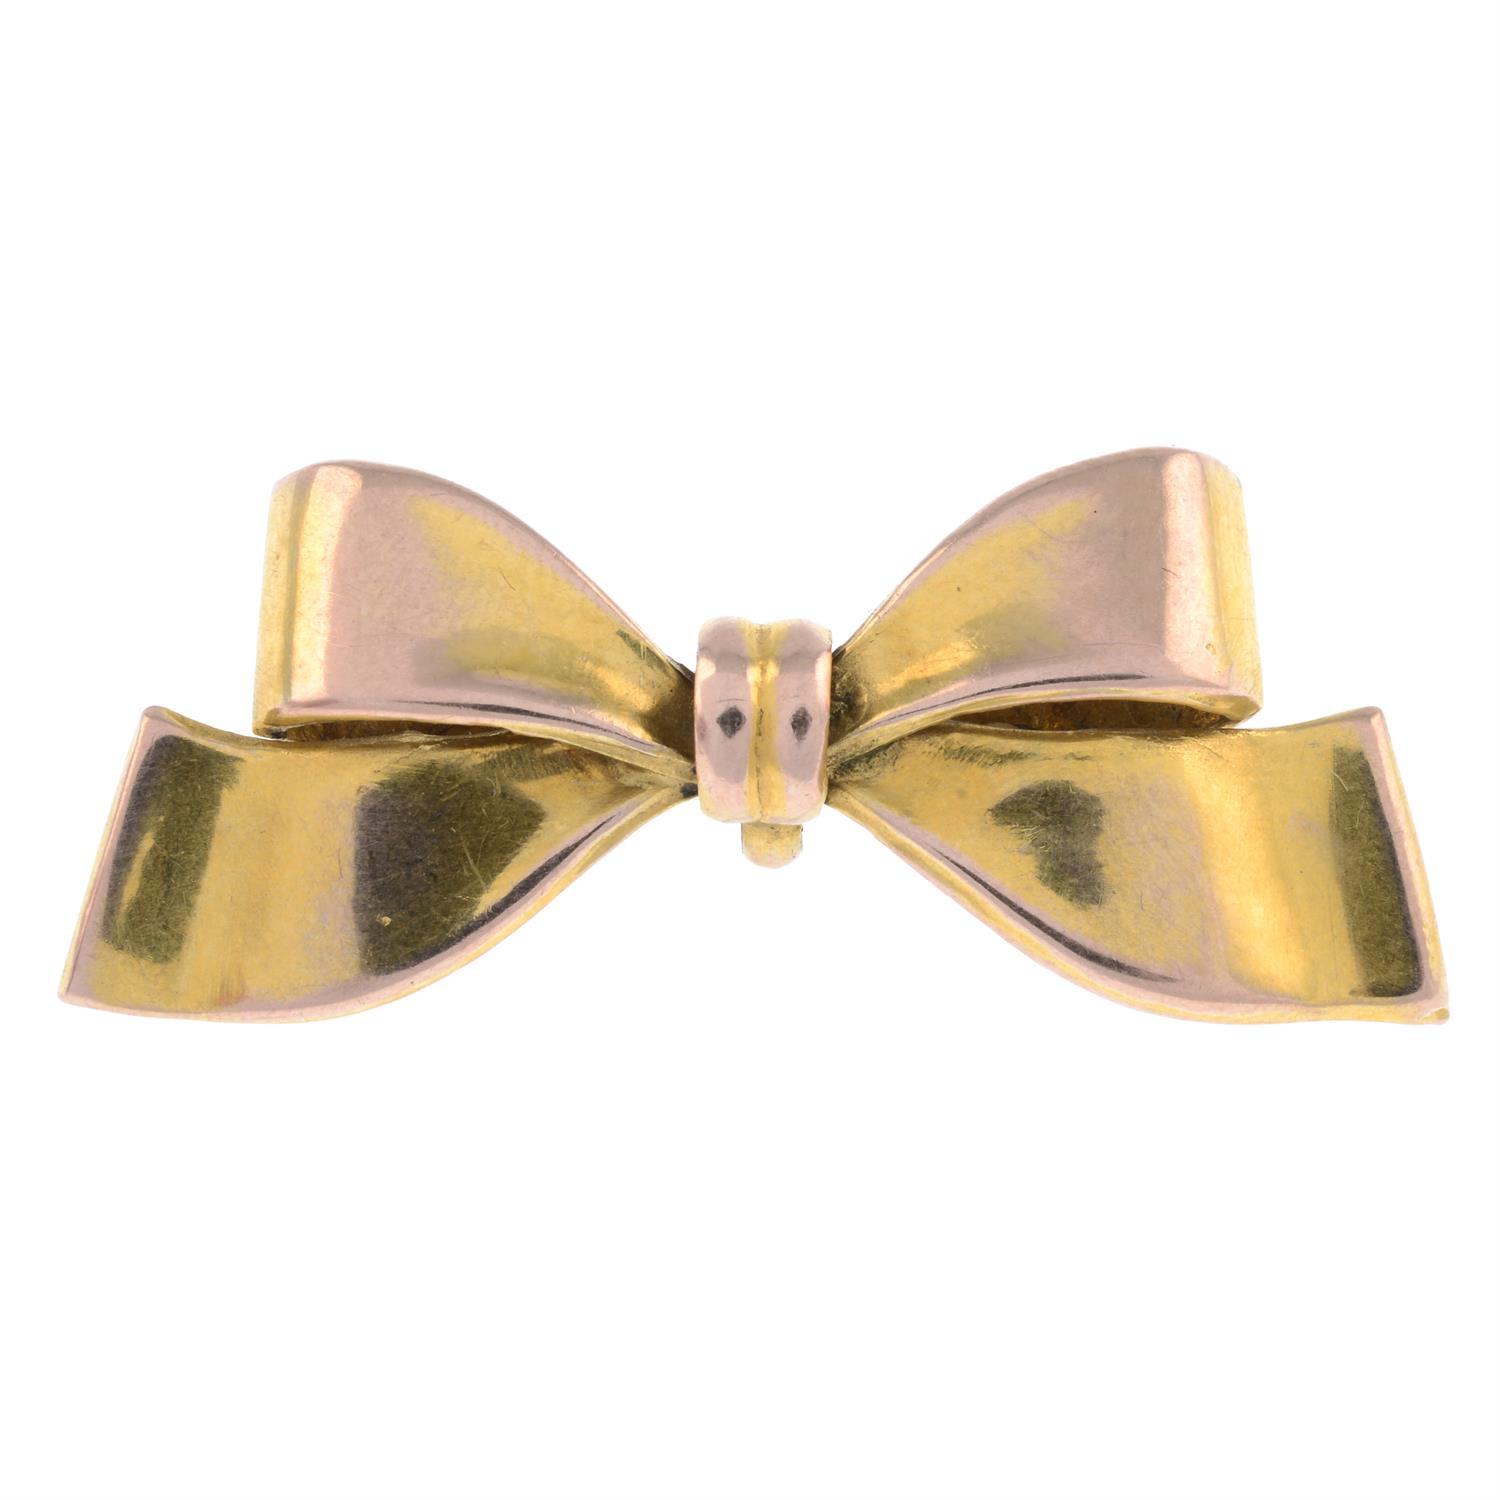 Edwardian 9ct gold bow brooch